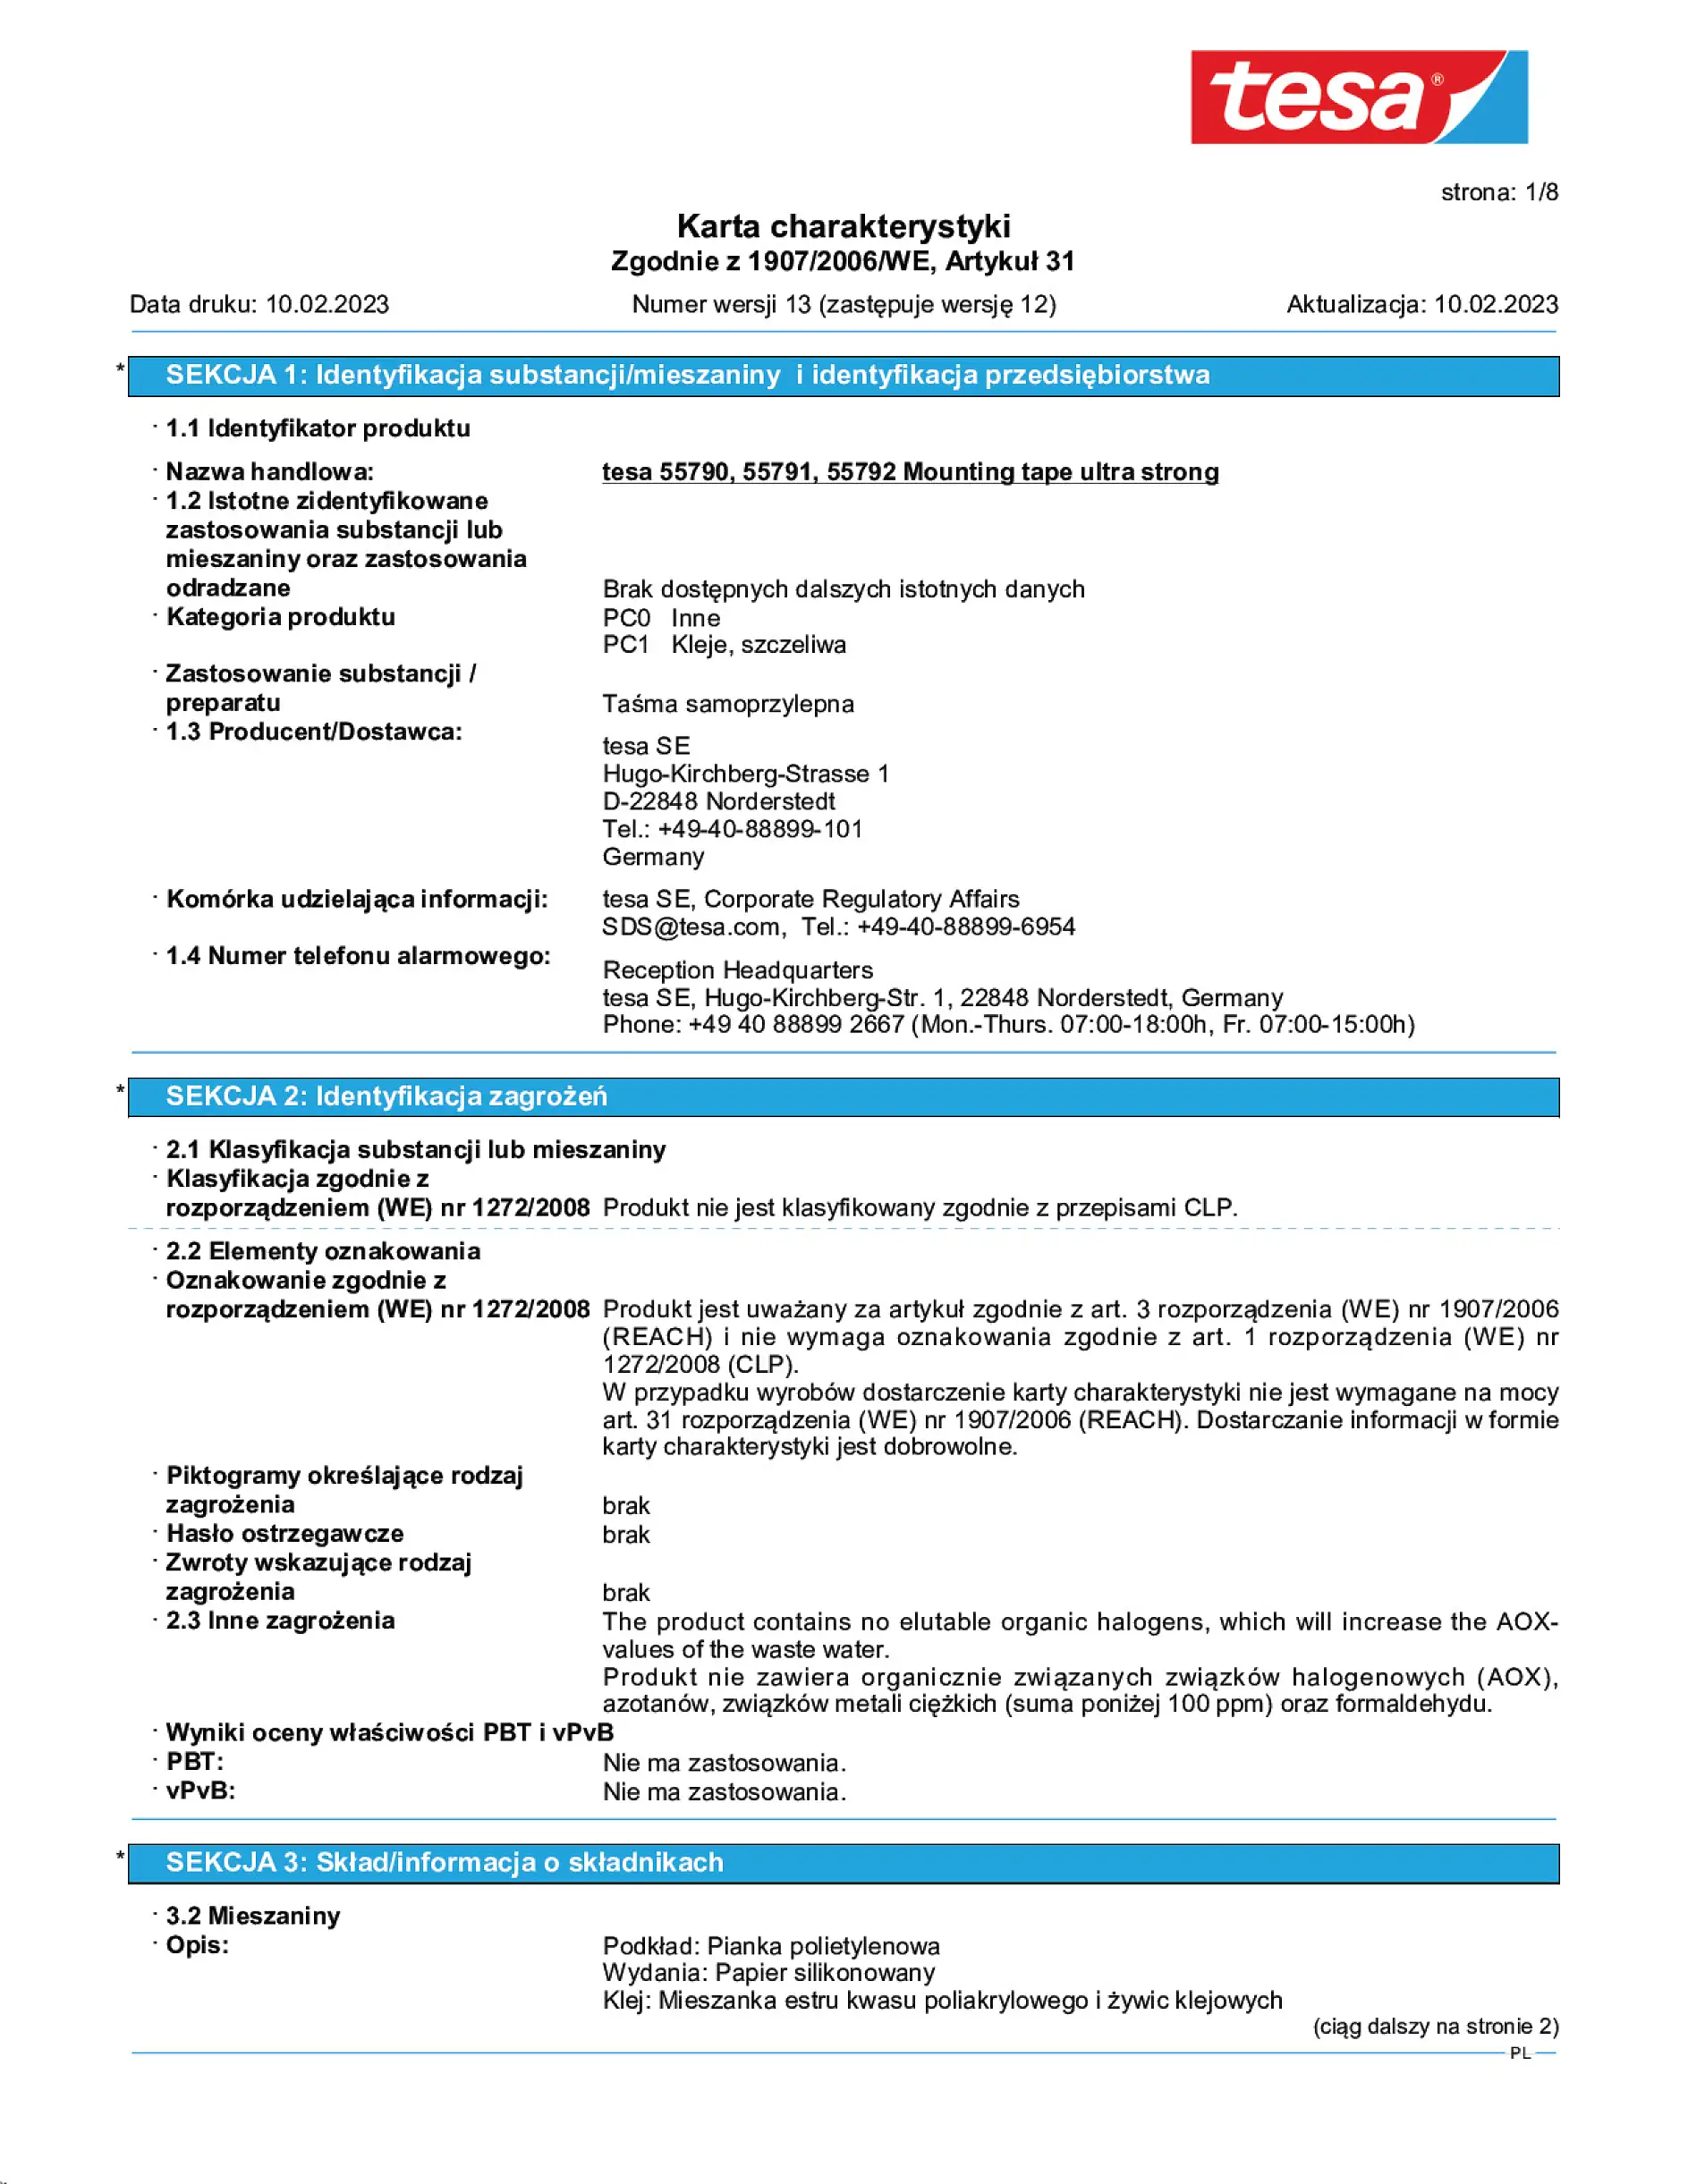 Safety data sheet_tesa® Powerbond 55791_pl-PL_v13